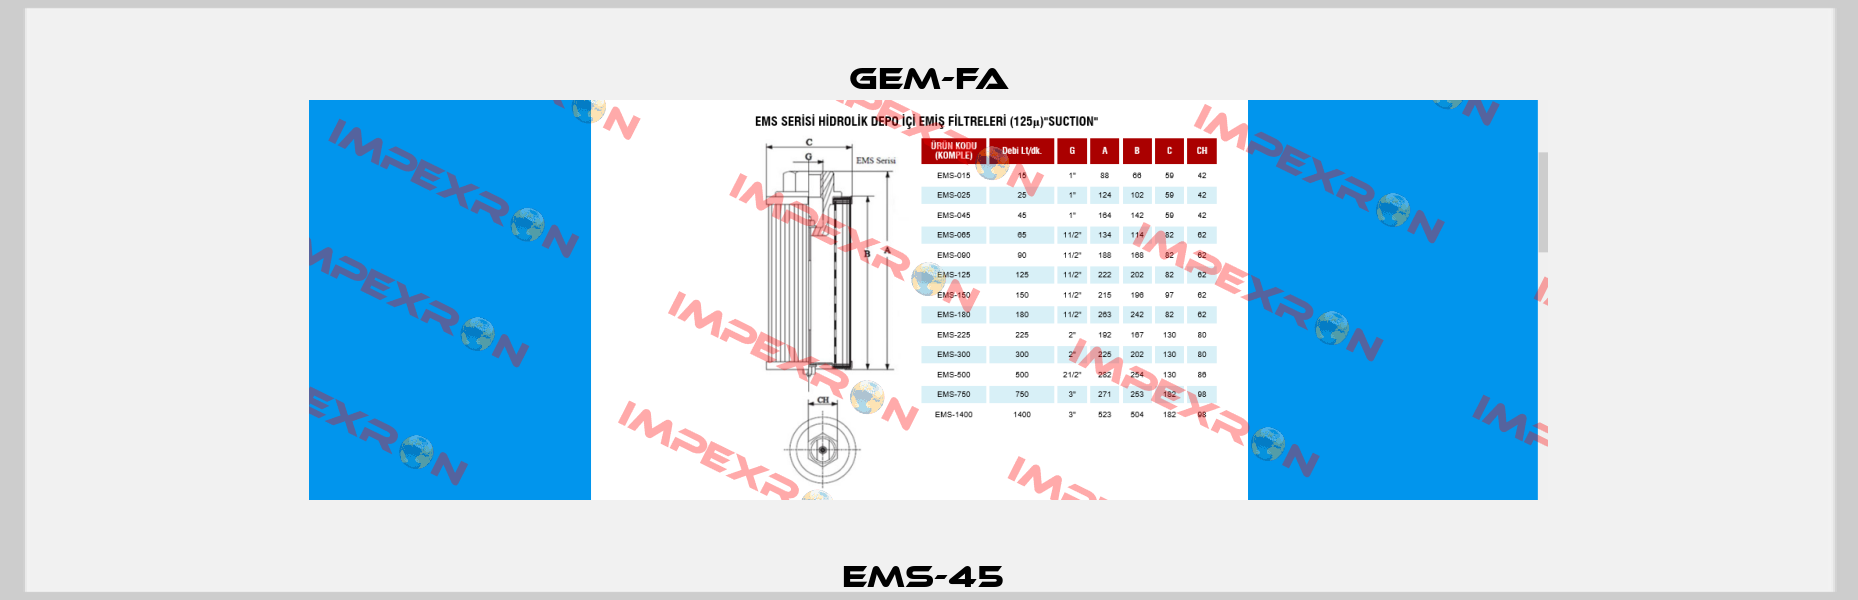 EMS-45  Gem-Fa